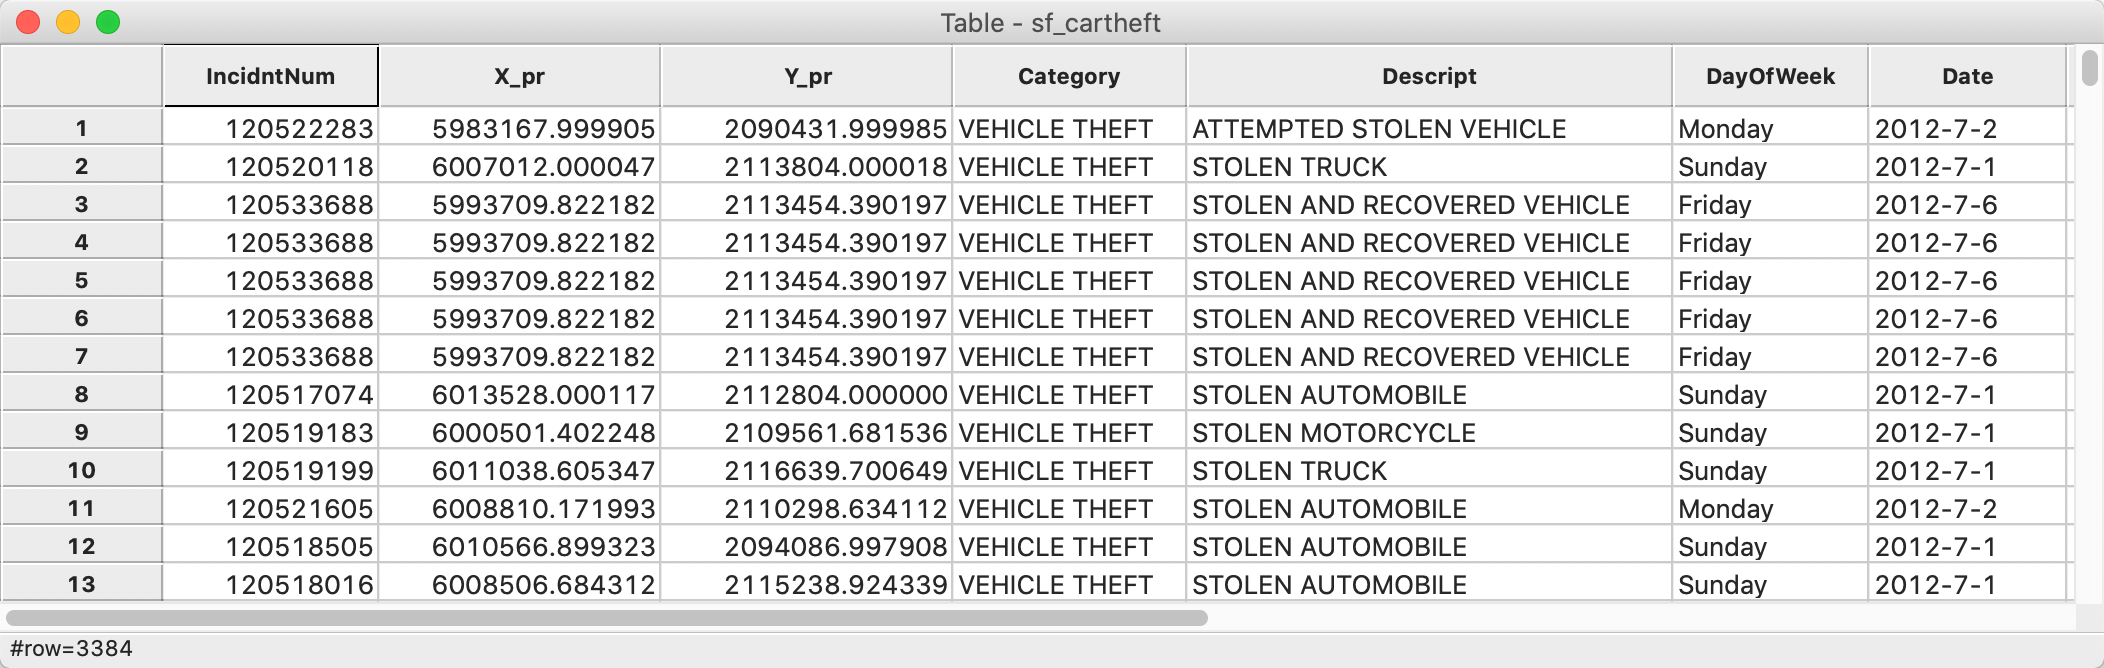 San Francisco car theft table